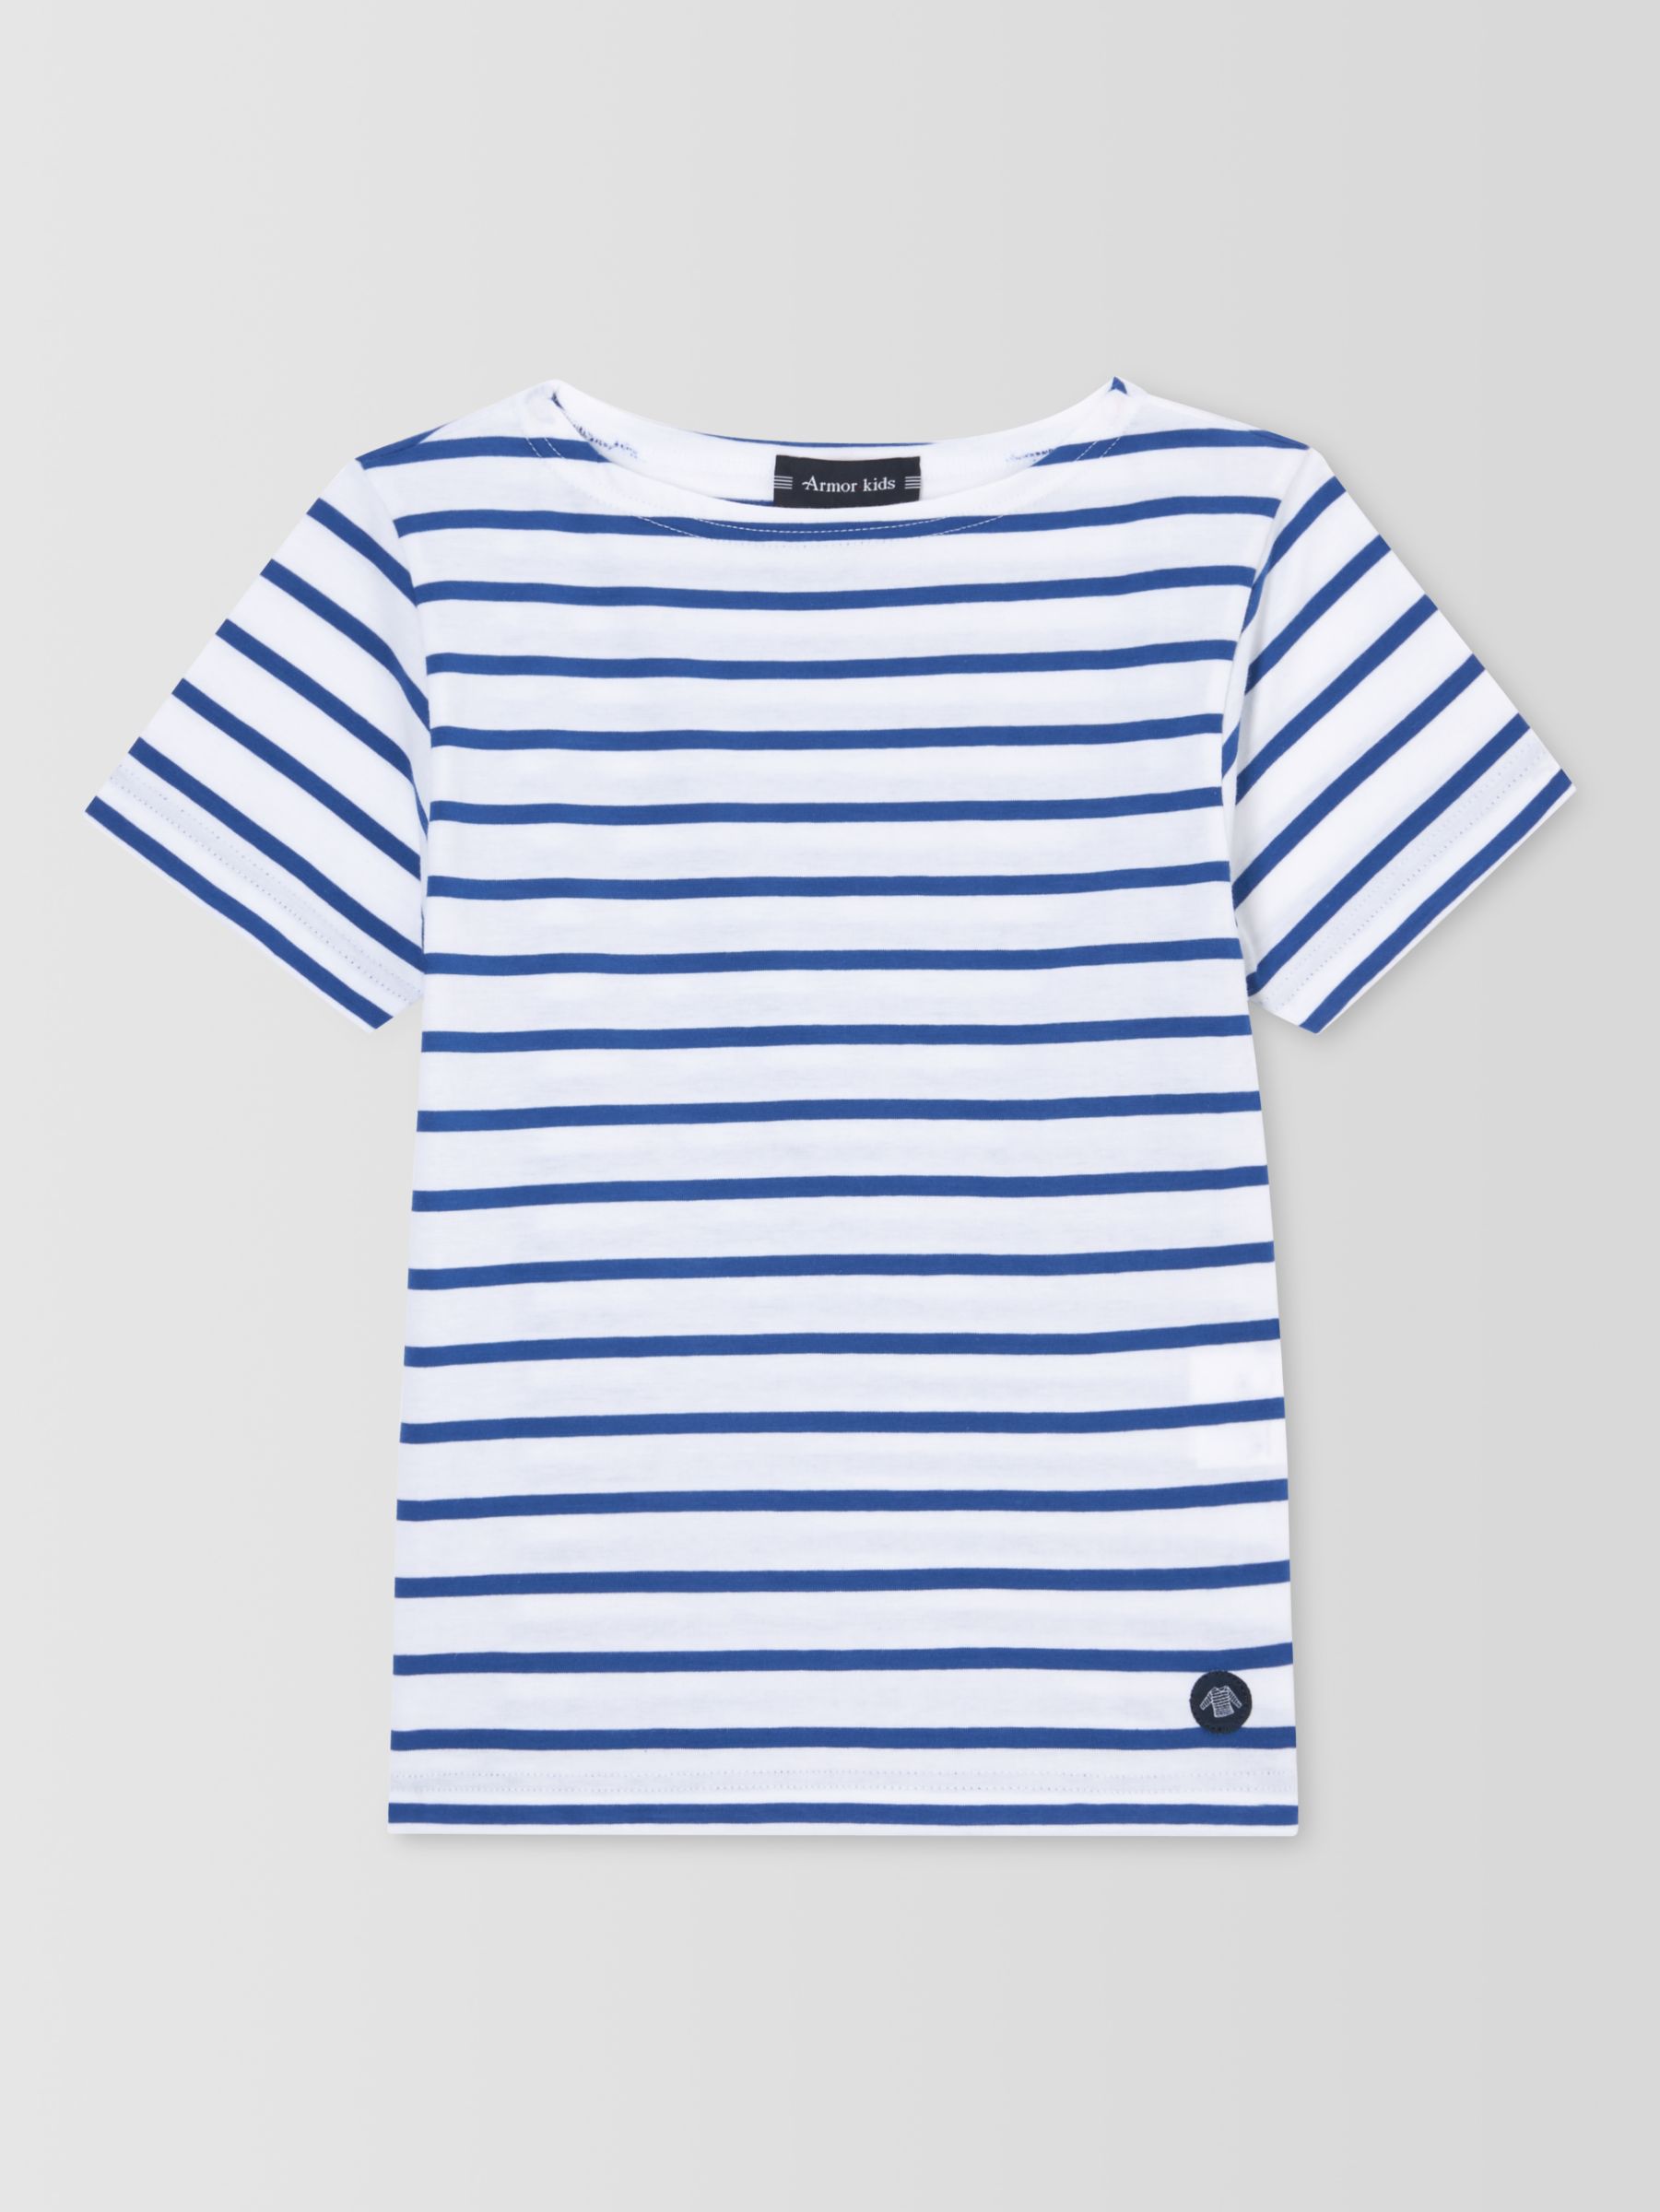 Buy Armor Lux Kids' Short Sleeve Stripe T-Shirt, Blue/White Online at johnlewis.com